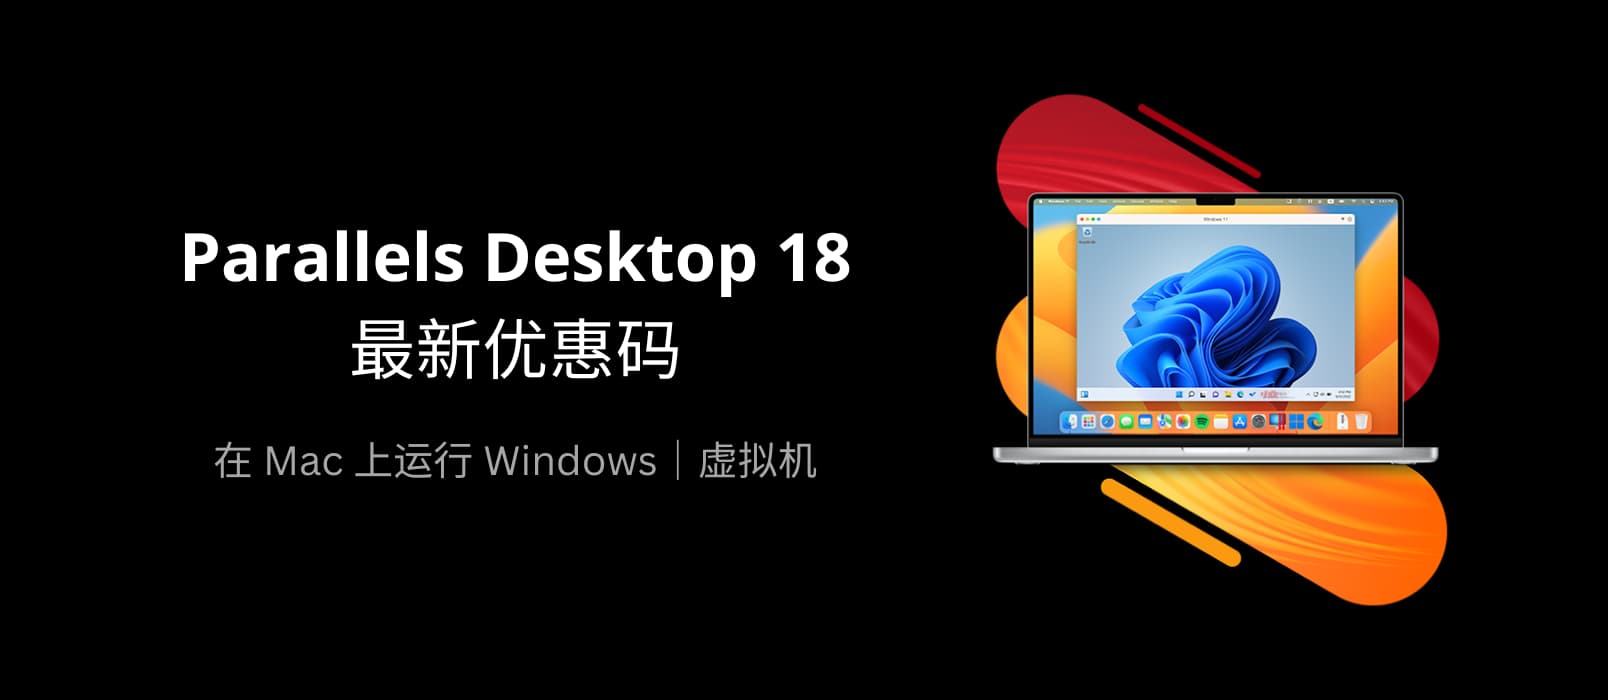 Parallels Desktop 18 最新优惠码：官网 8 折促销，结账自动享 1